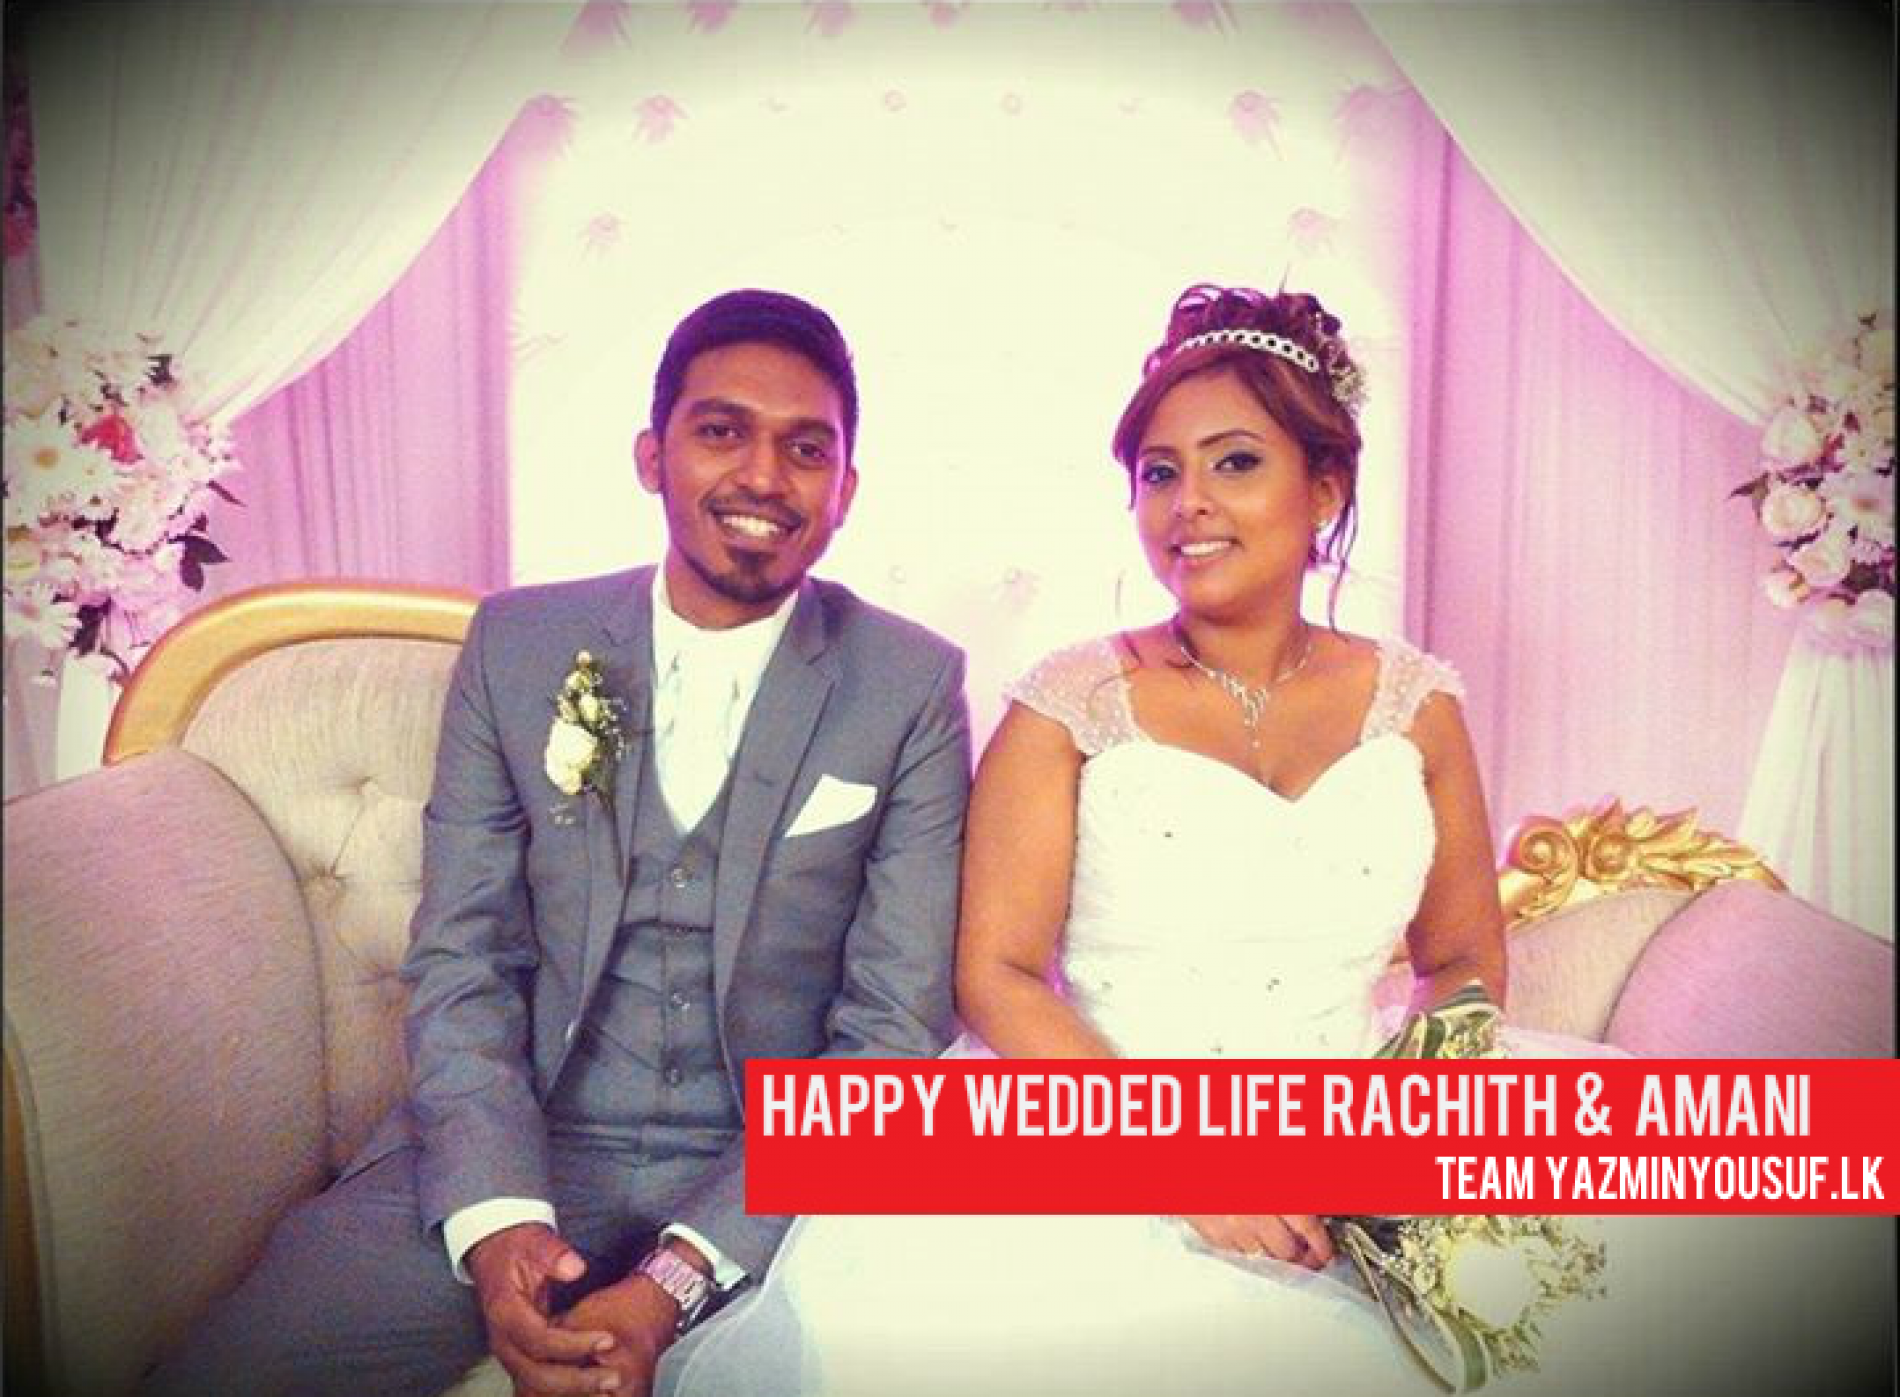 Congratz To Rachith & Amani